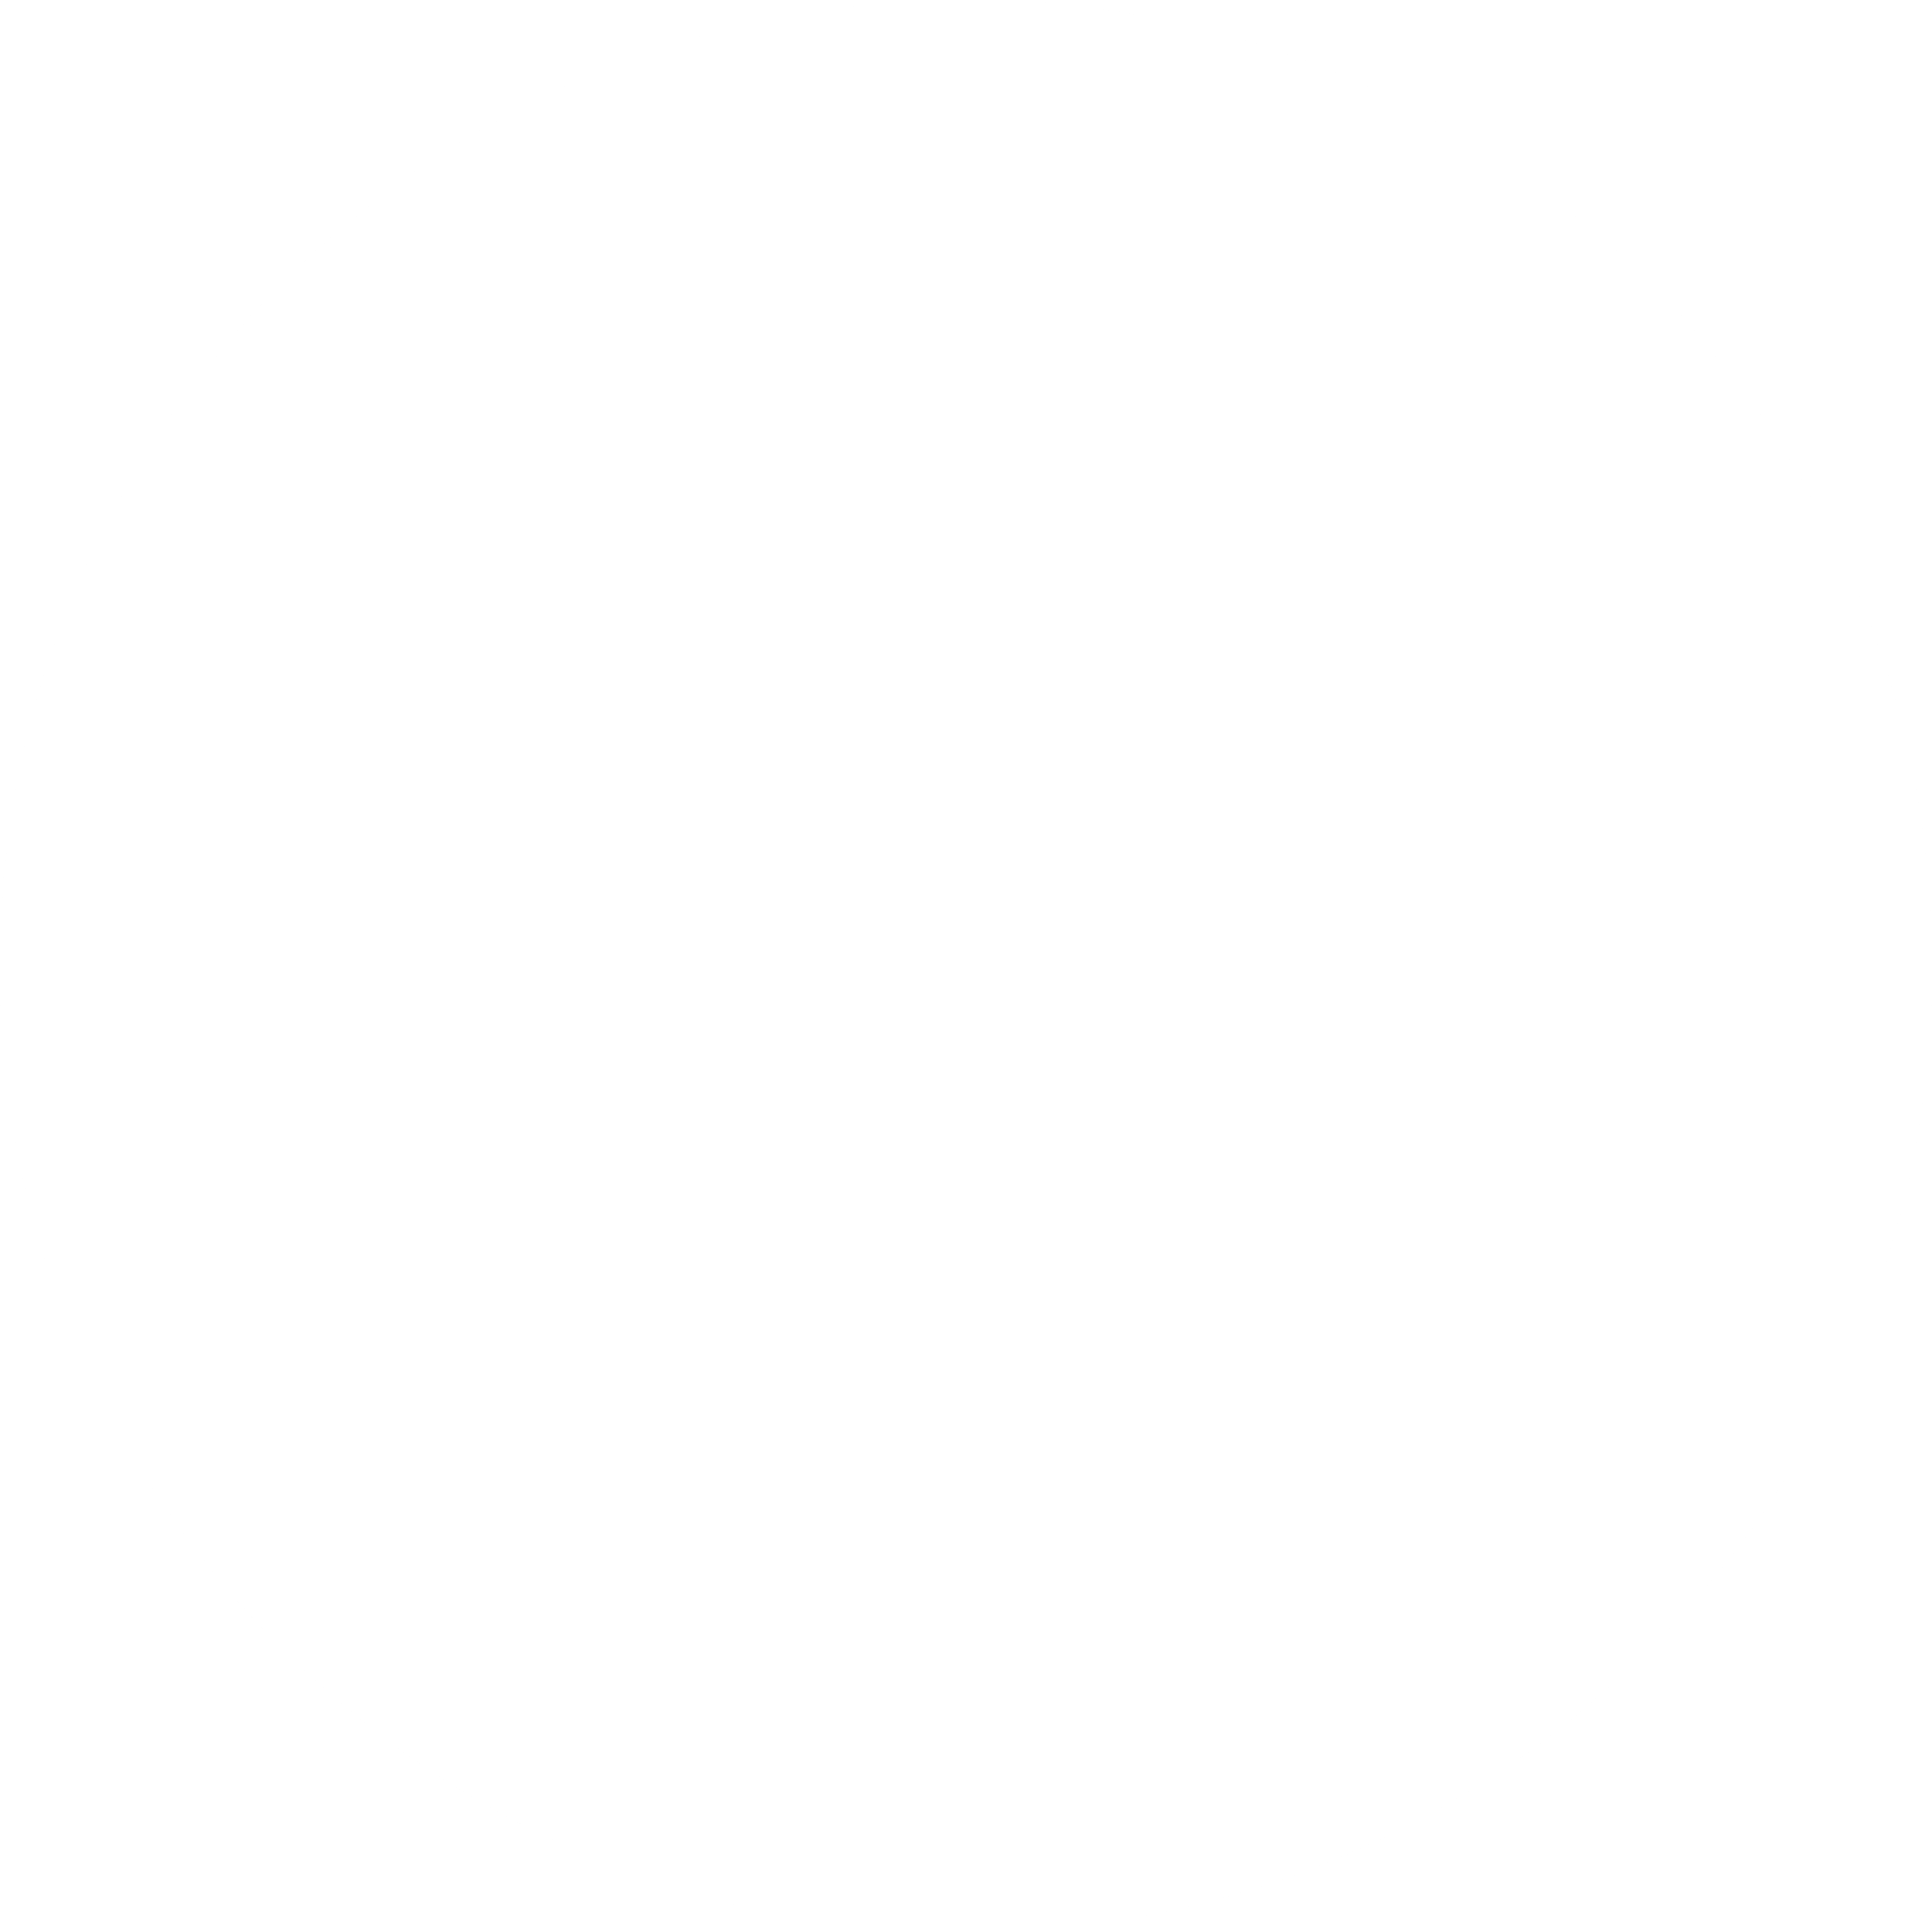 Monero Logo - Monero Logo PNG Transparent & SVG Vector - Freebie Supply